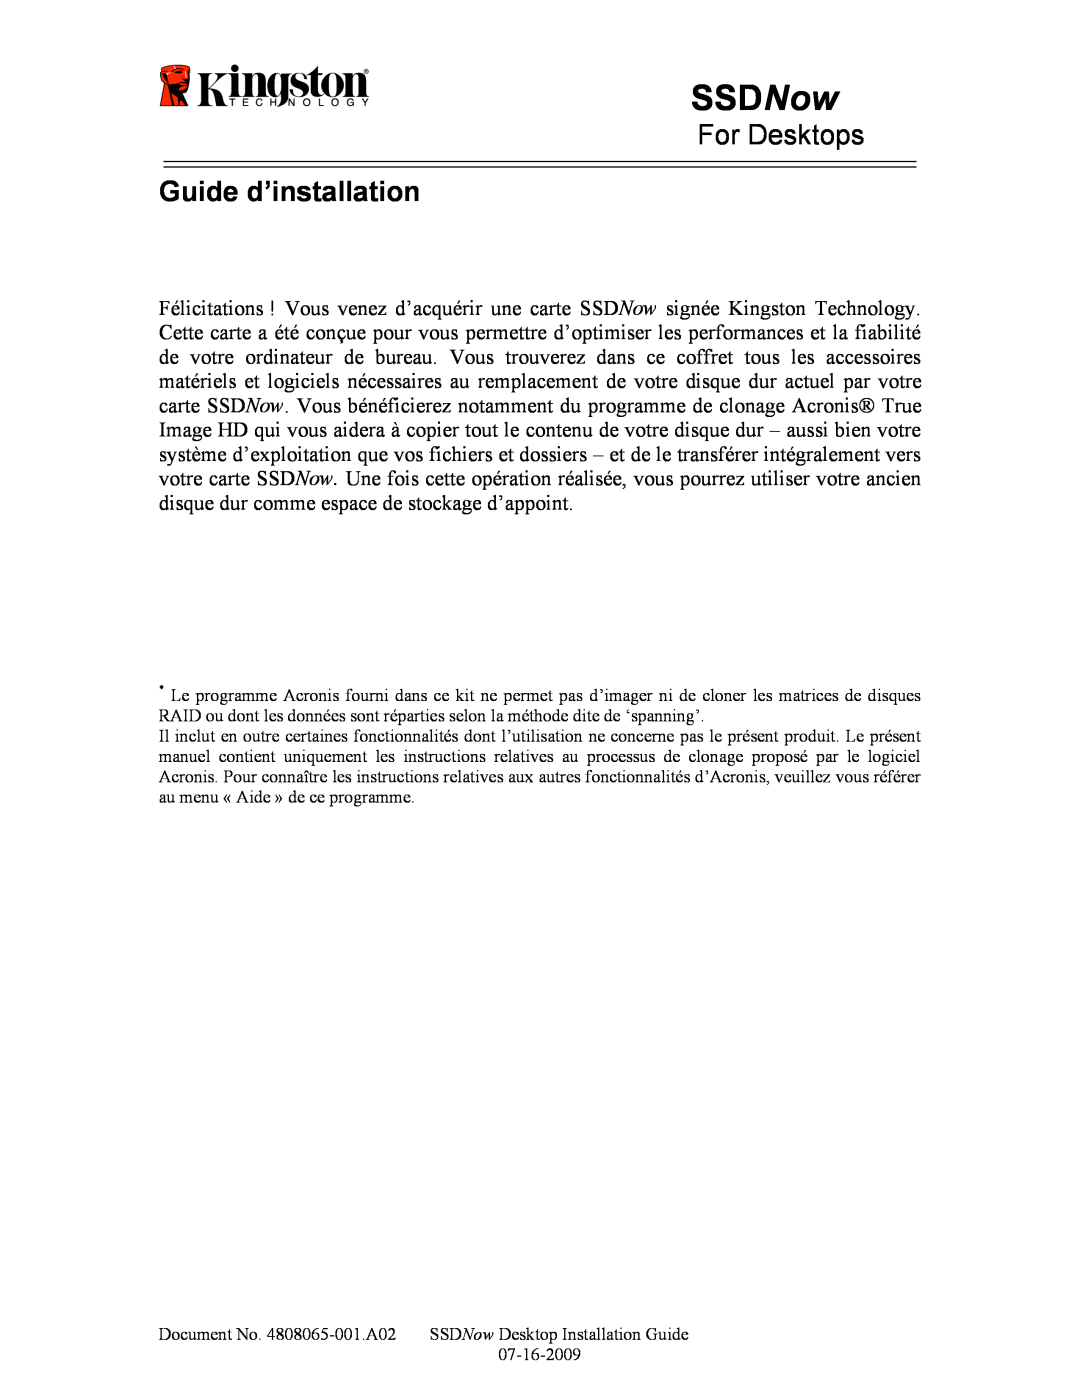 Kingston Technology 07-16-2009 manual Guide d’installation, SSDNow, For Desktops 